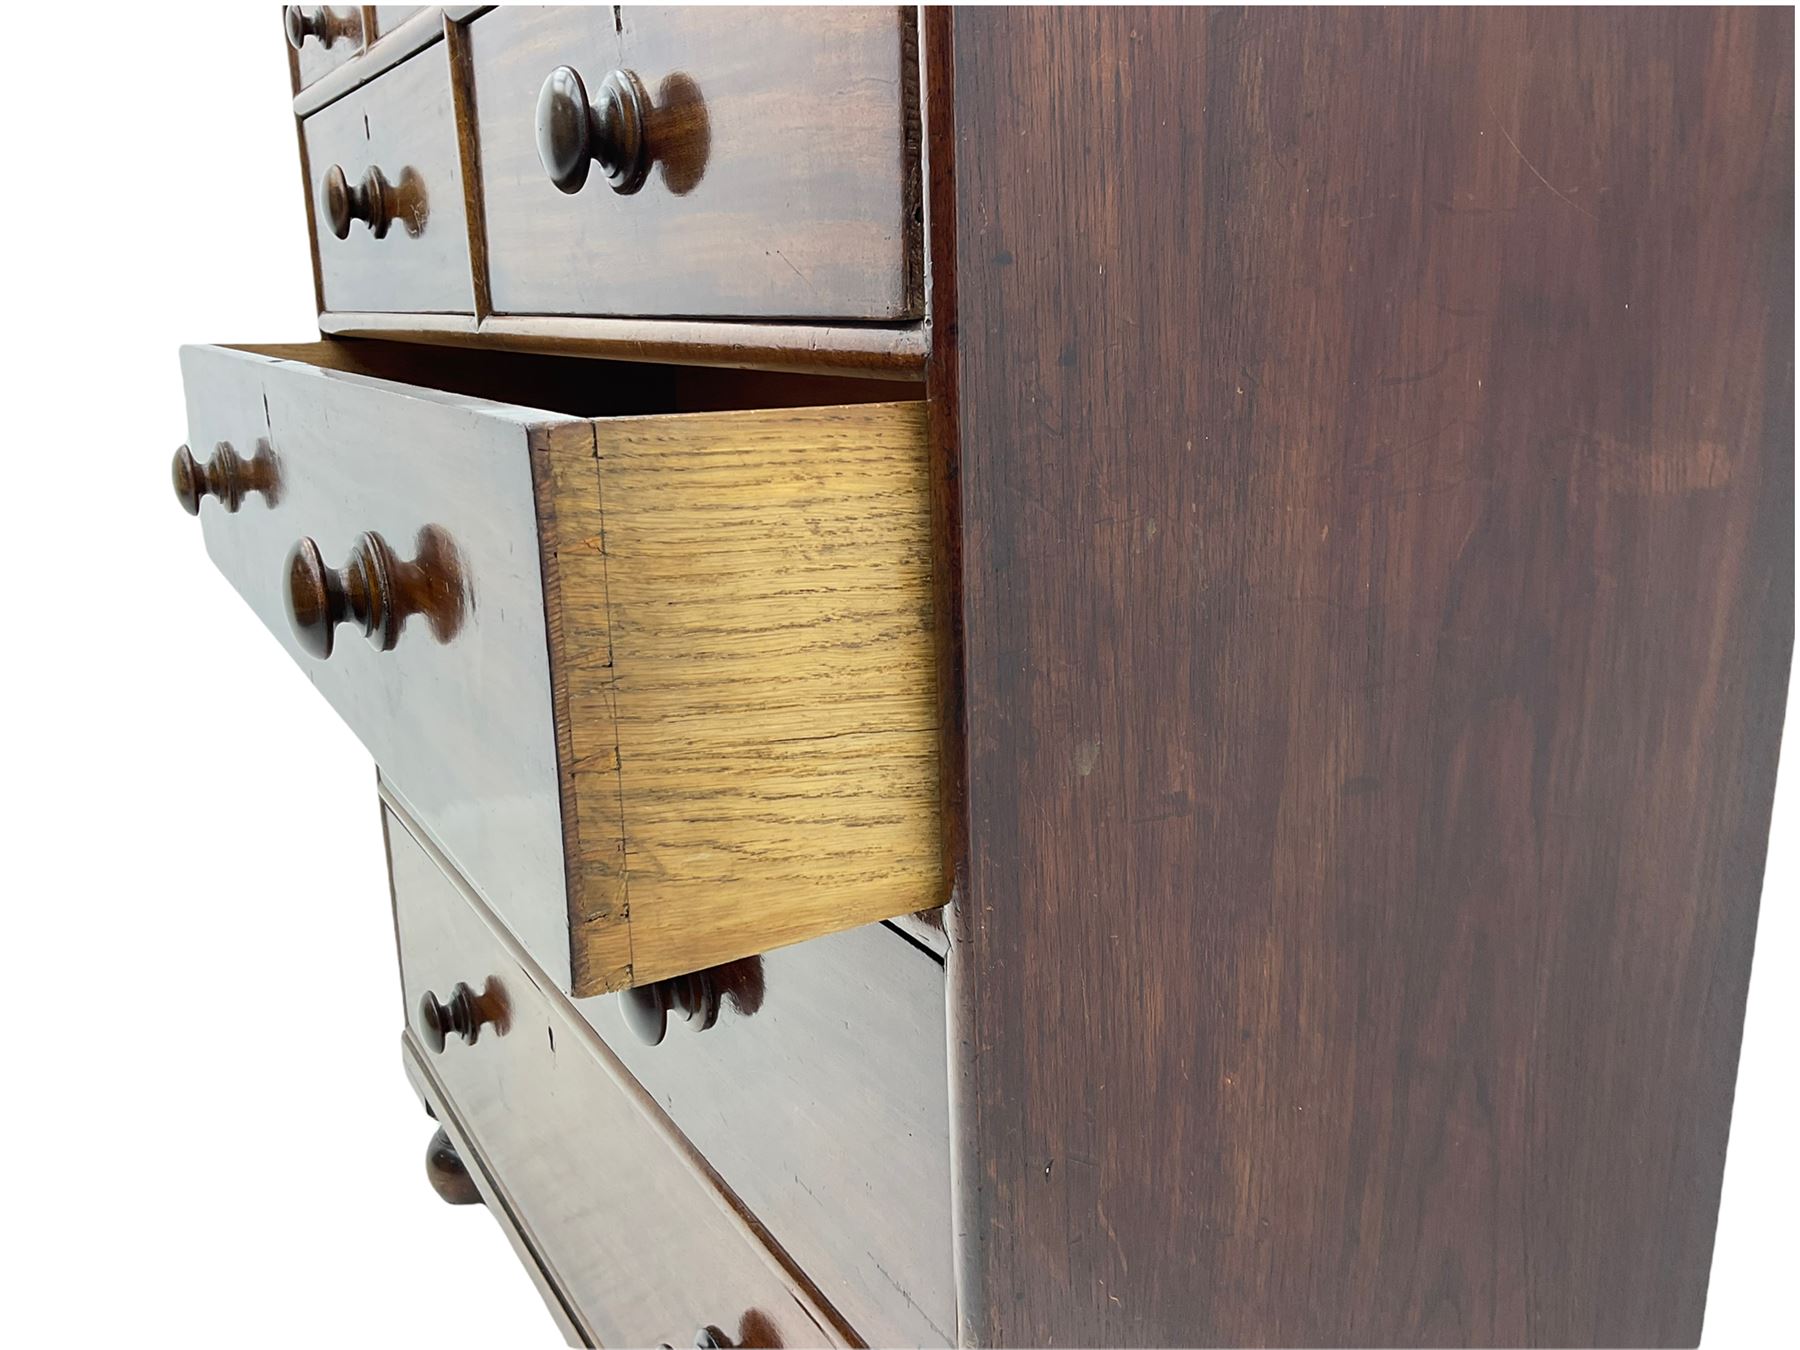 19th century mahogany chest - Image 7 of 14